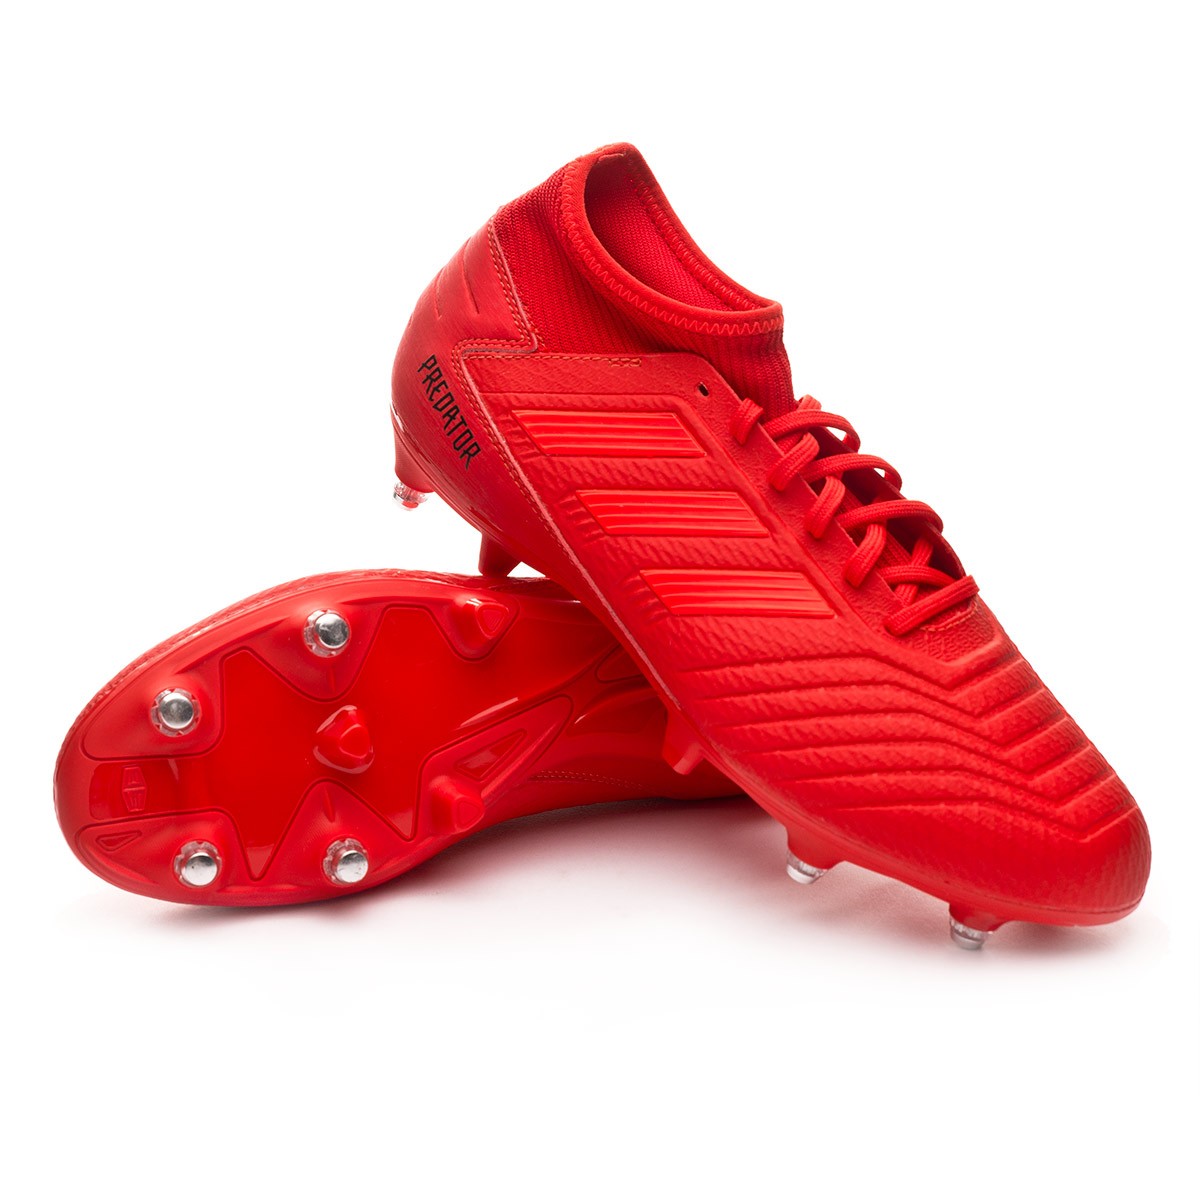 Bota de fútbol adidas Predator 19.3 SG Active red-Solar red-Core black -  Tienda de fútbol Fútbol Emotion